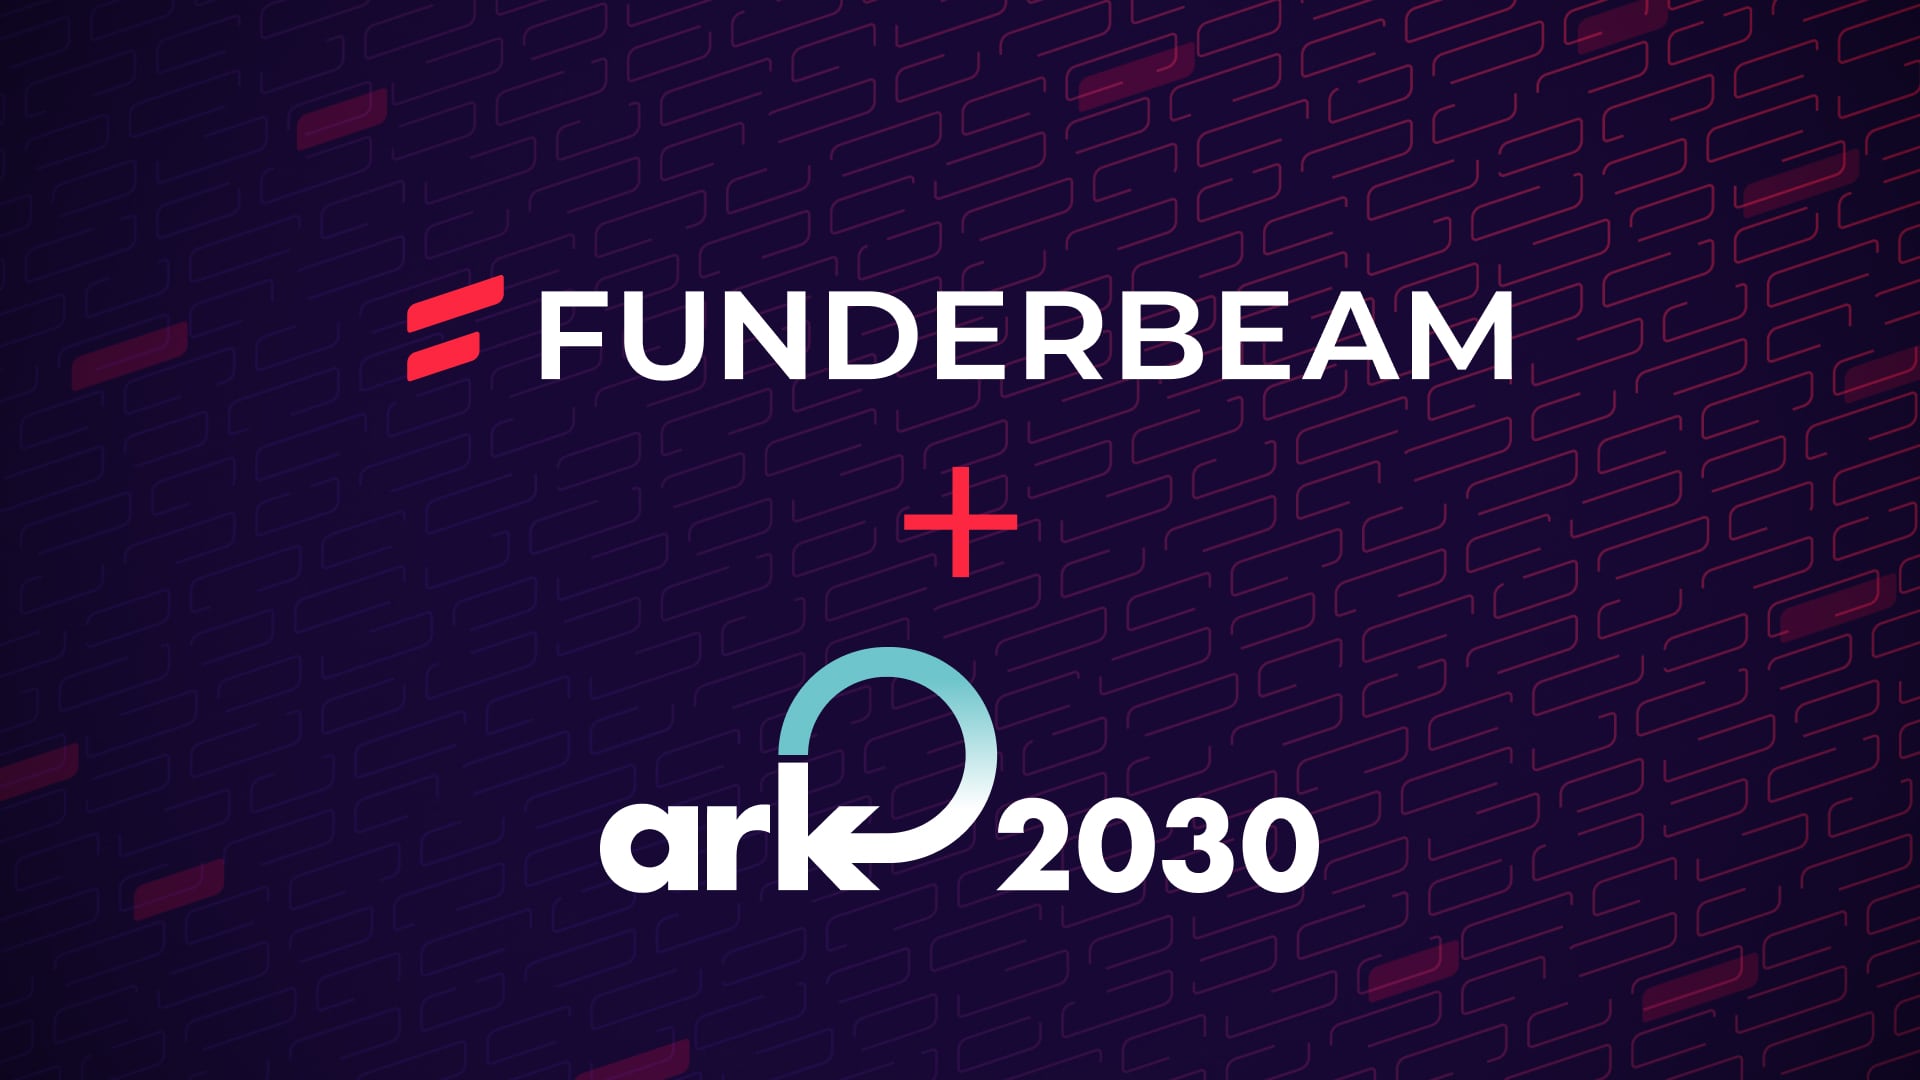 Funderbeam Ark2030 Partnership Announcement